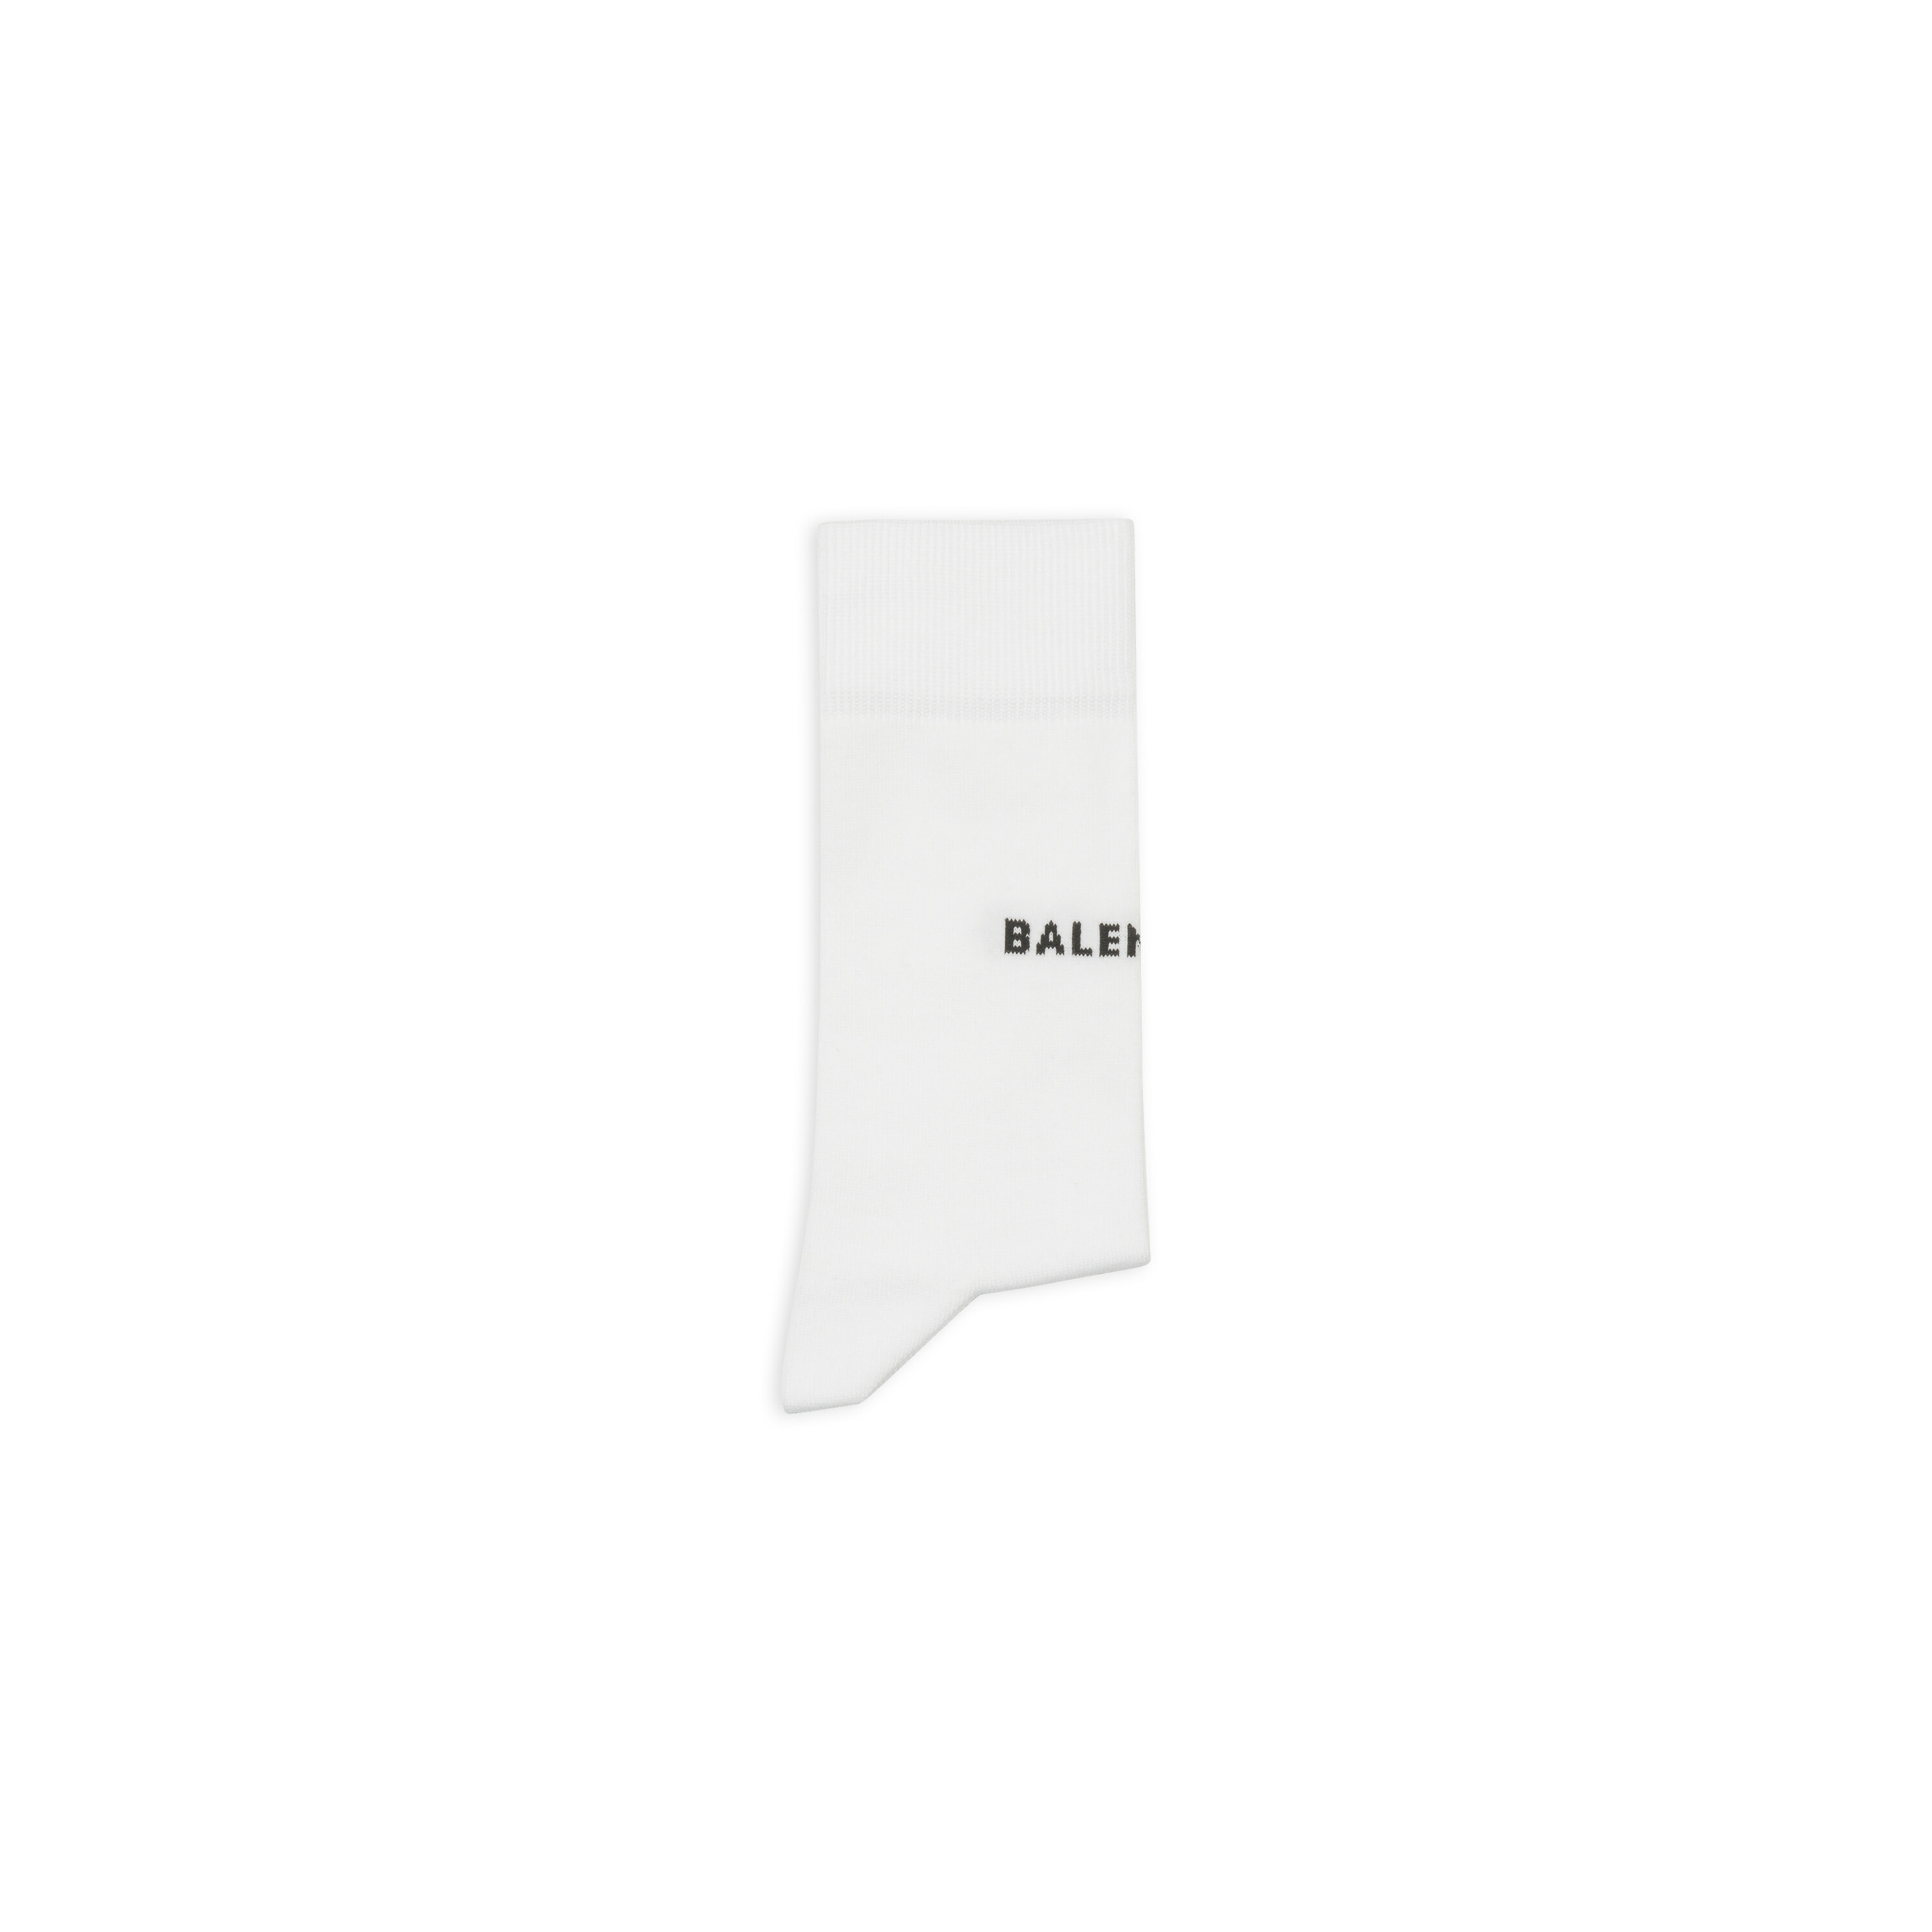 ASKET Men's Ribbed Cotton Sock